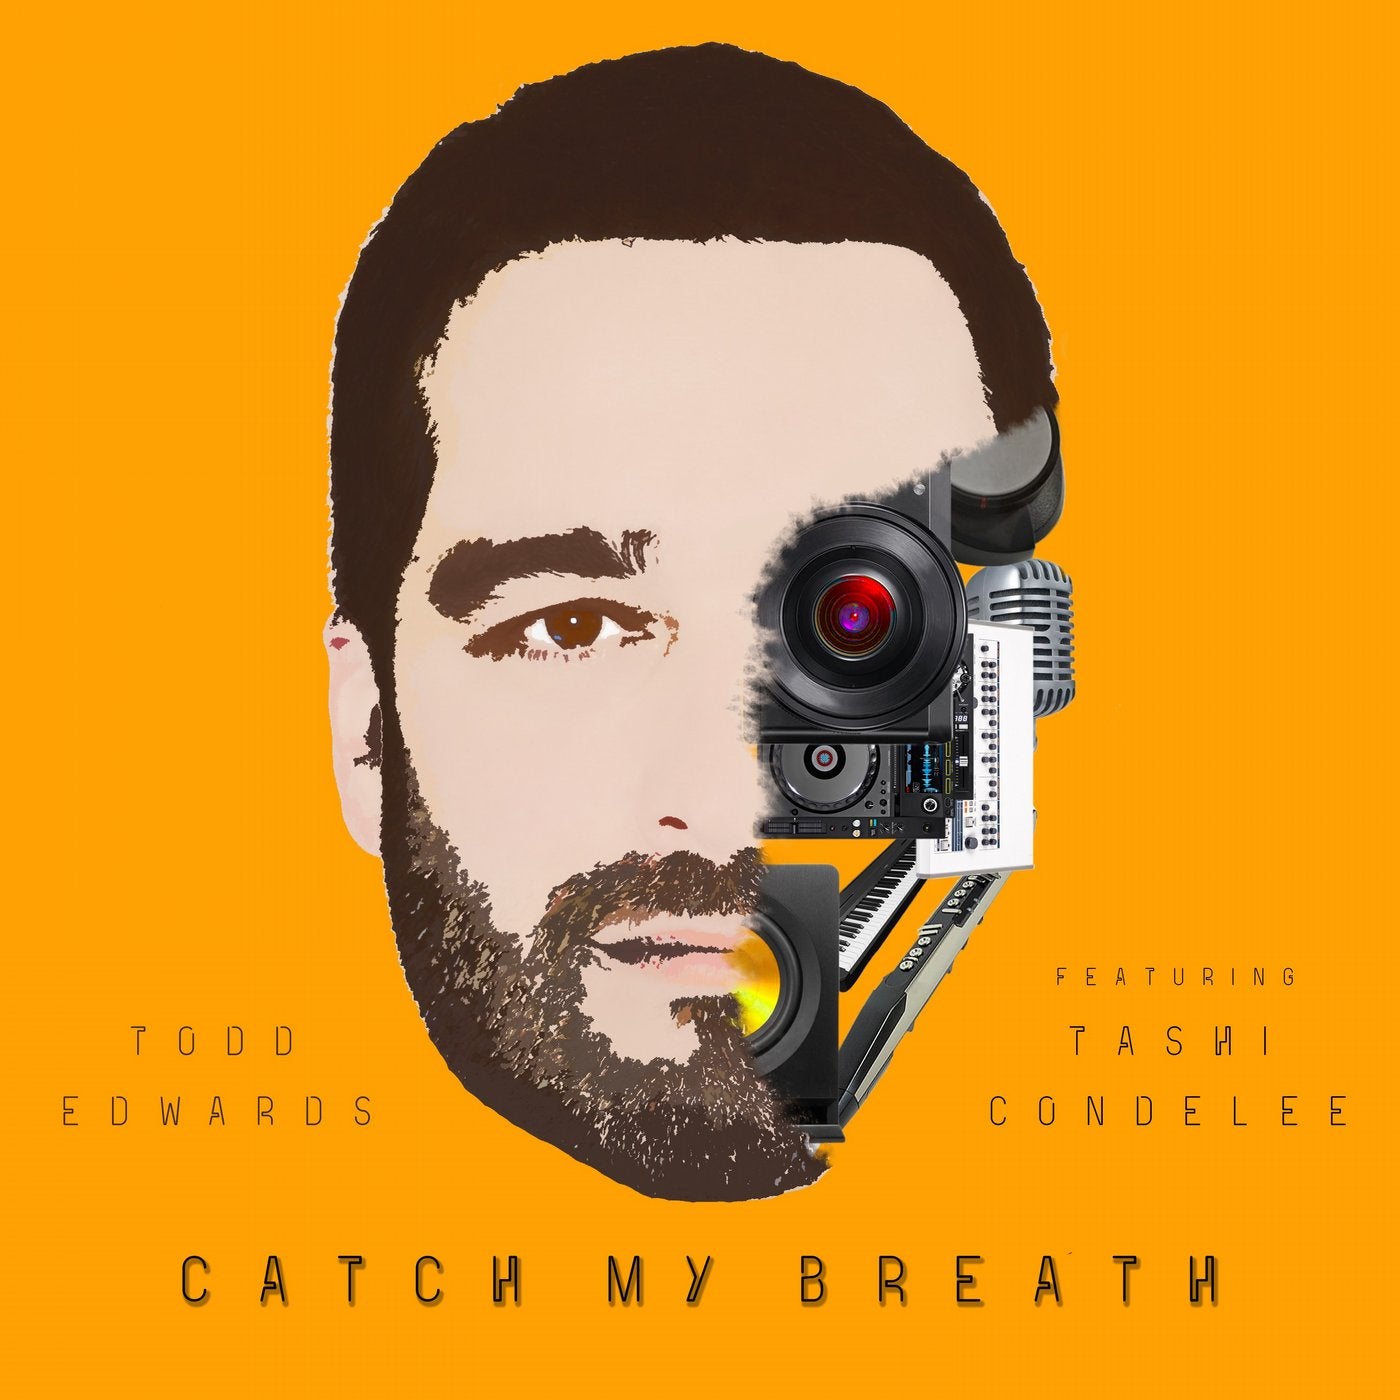 Catch My Breath feat. Tashi Condelee